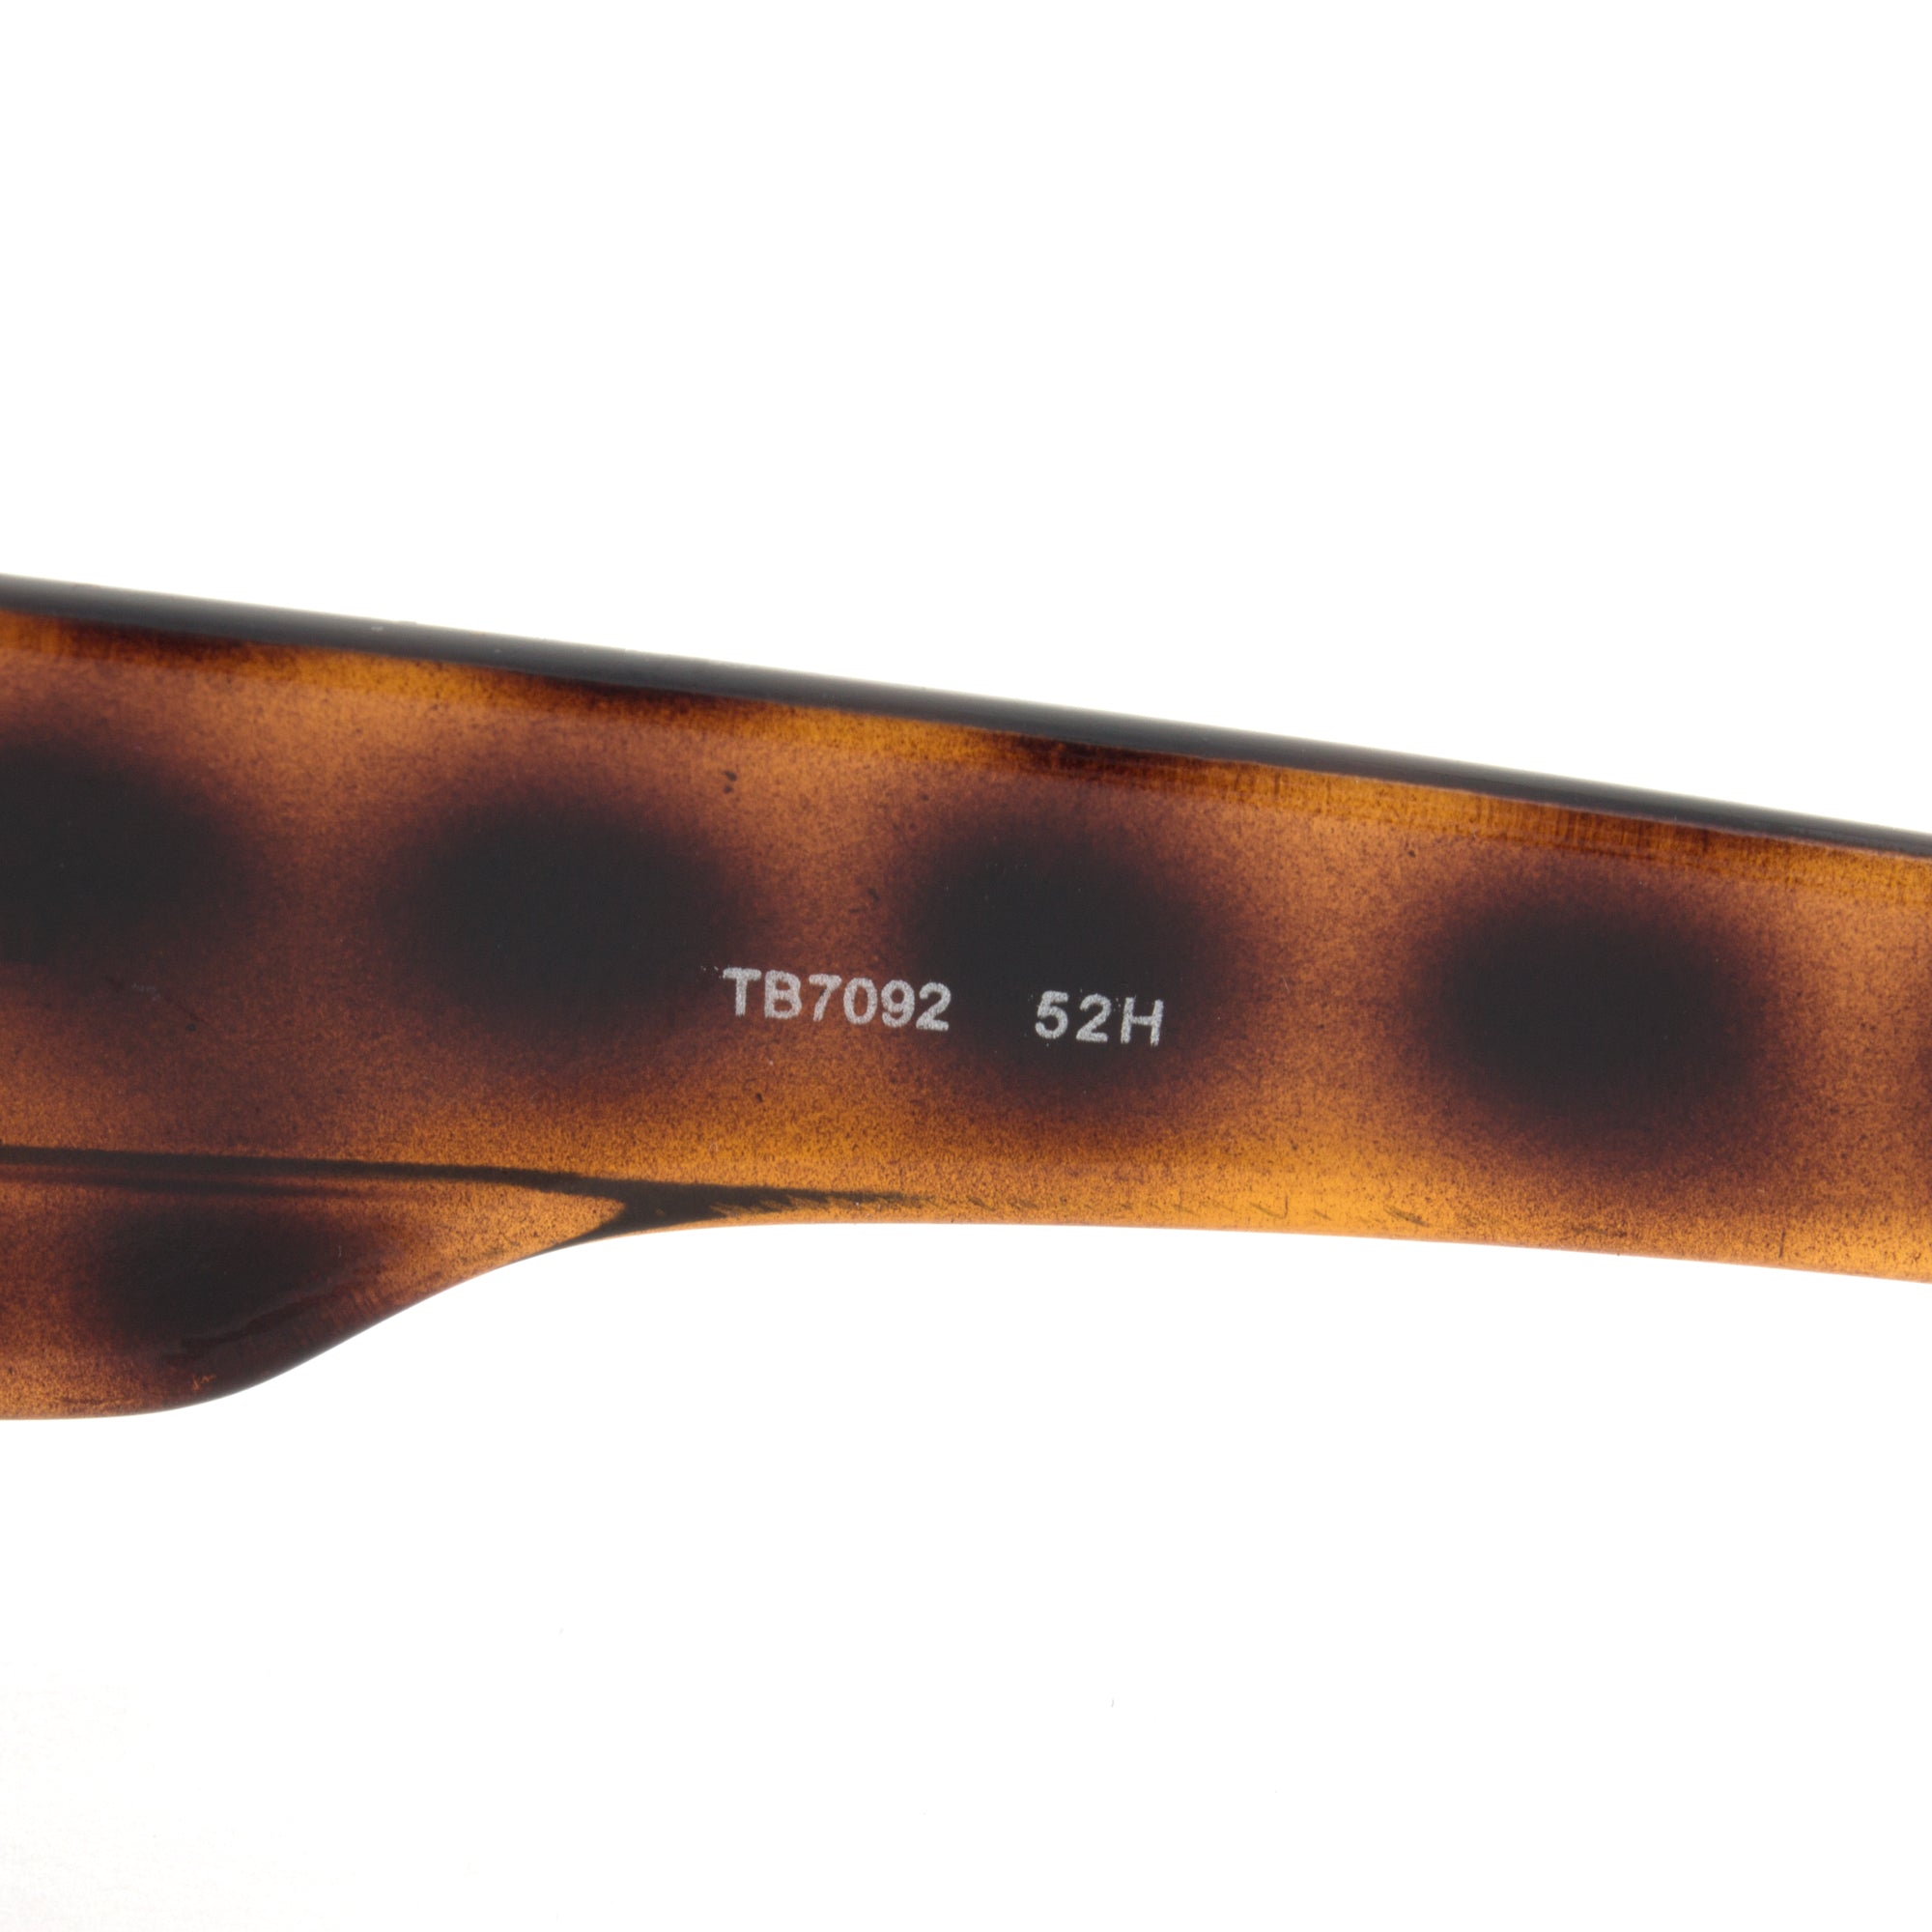 Timberland TB7092 52H Rectangular Sunglasses | Tortoise Brown Frame | Brown Lens